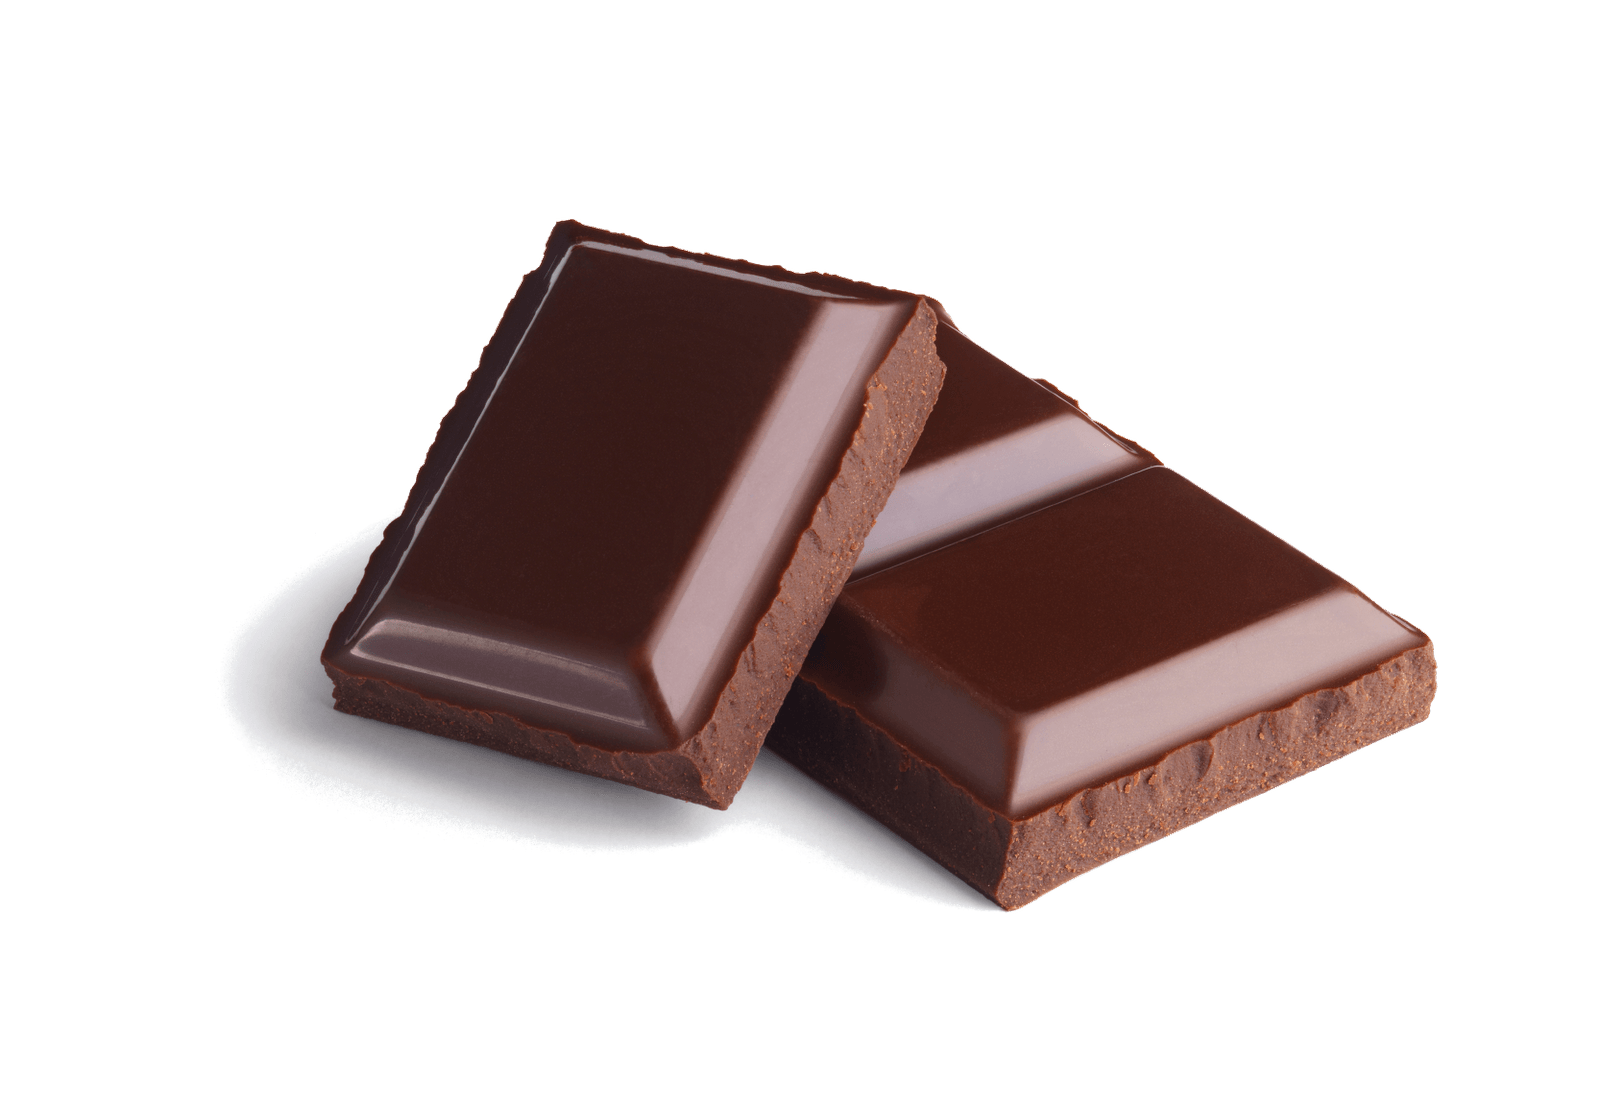 Chocolate Bar Dark Chocolate Candy Food Chocolate Png Download 1600